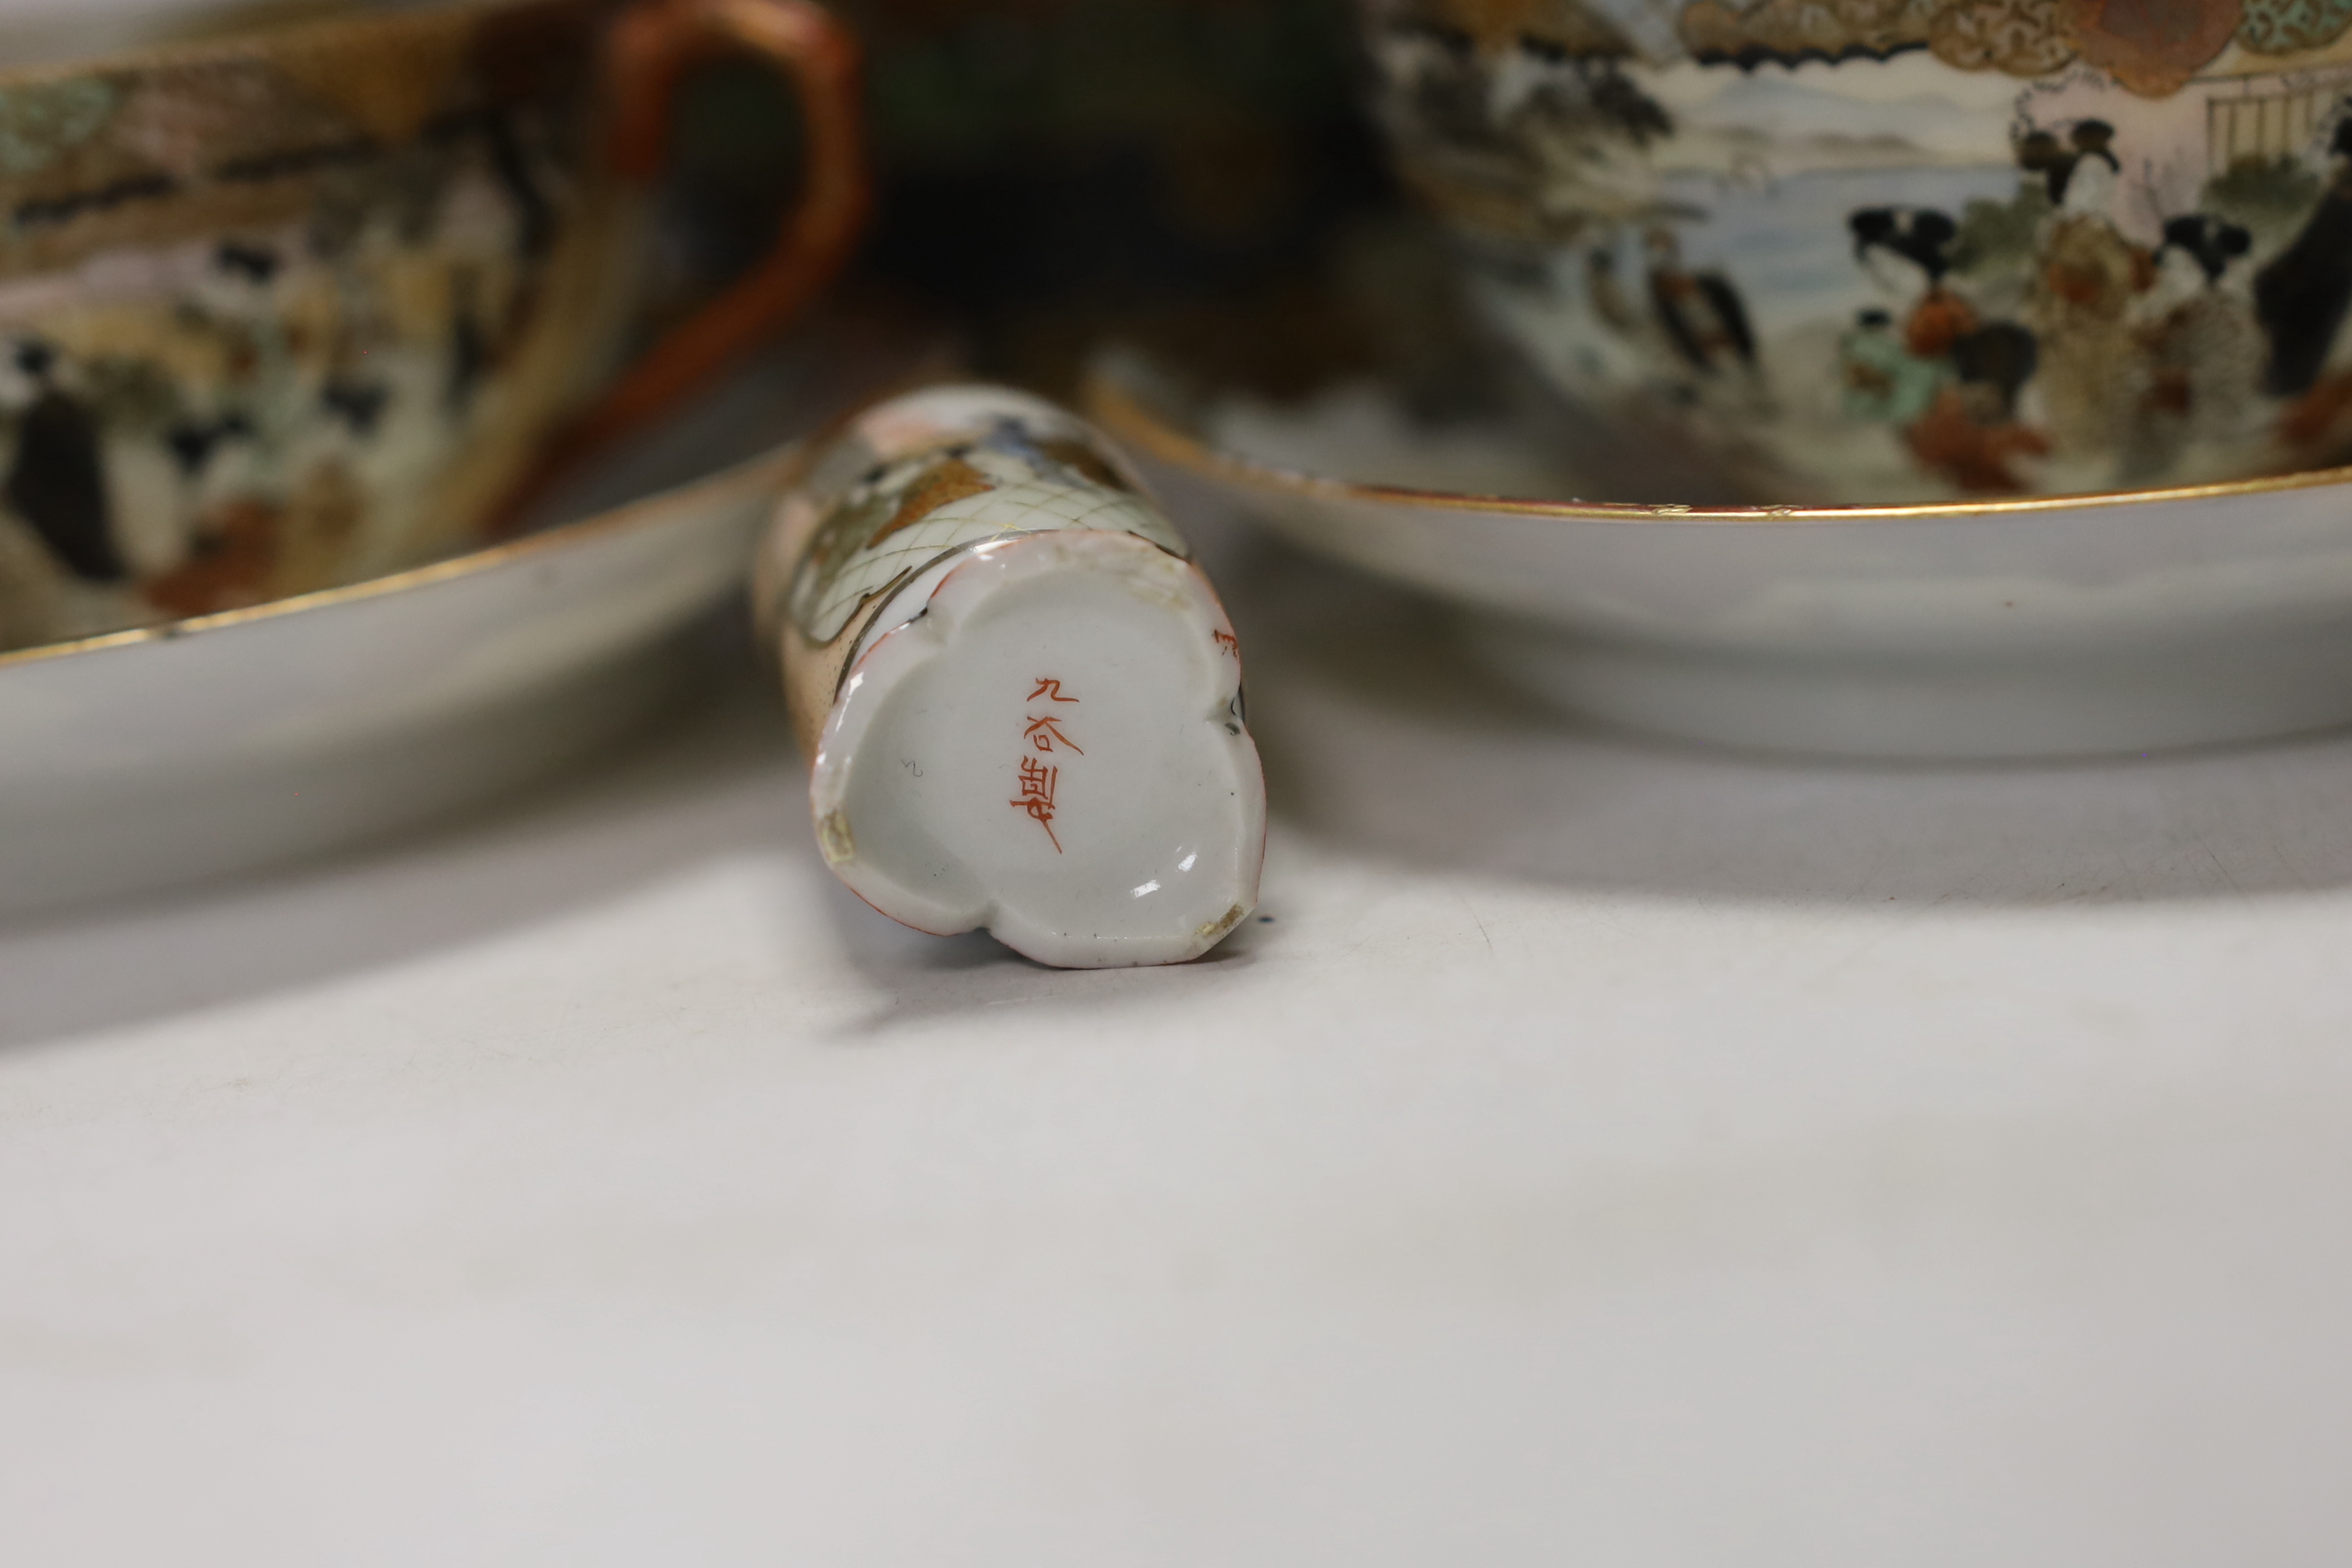 Japanese ceramics including an Imari bottle vase, a Satsuma vase and Kutani eggshell porcelain, tallest 22cm (8)